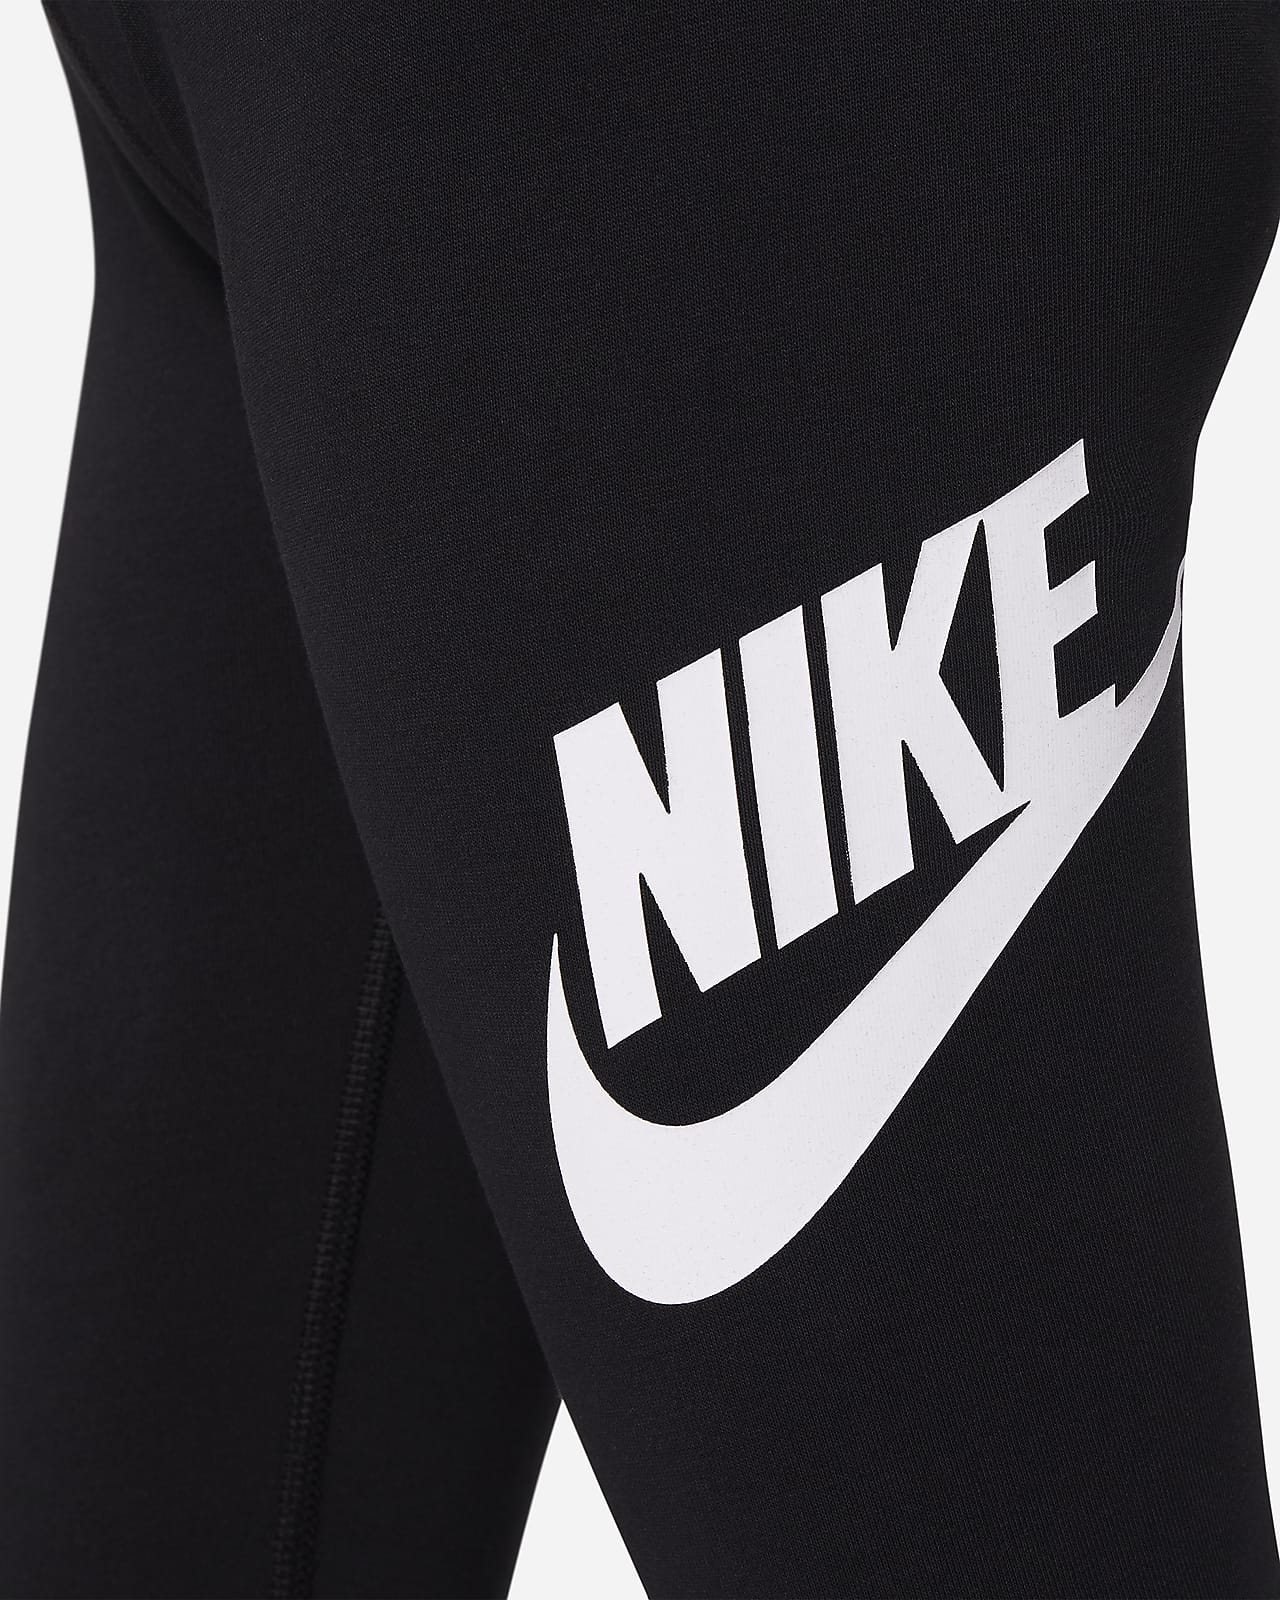 Nike Women's Sportswear Essential Leggings Futura HR (Black/White